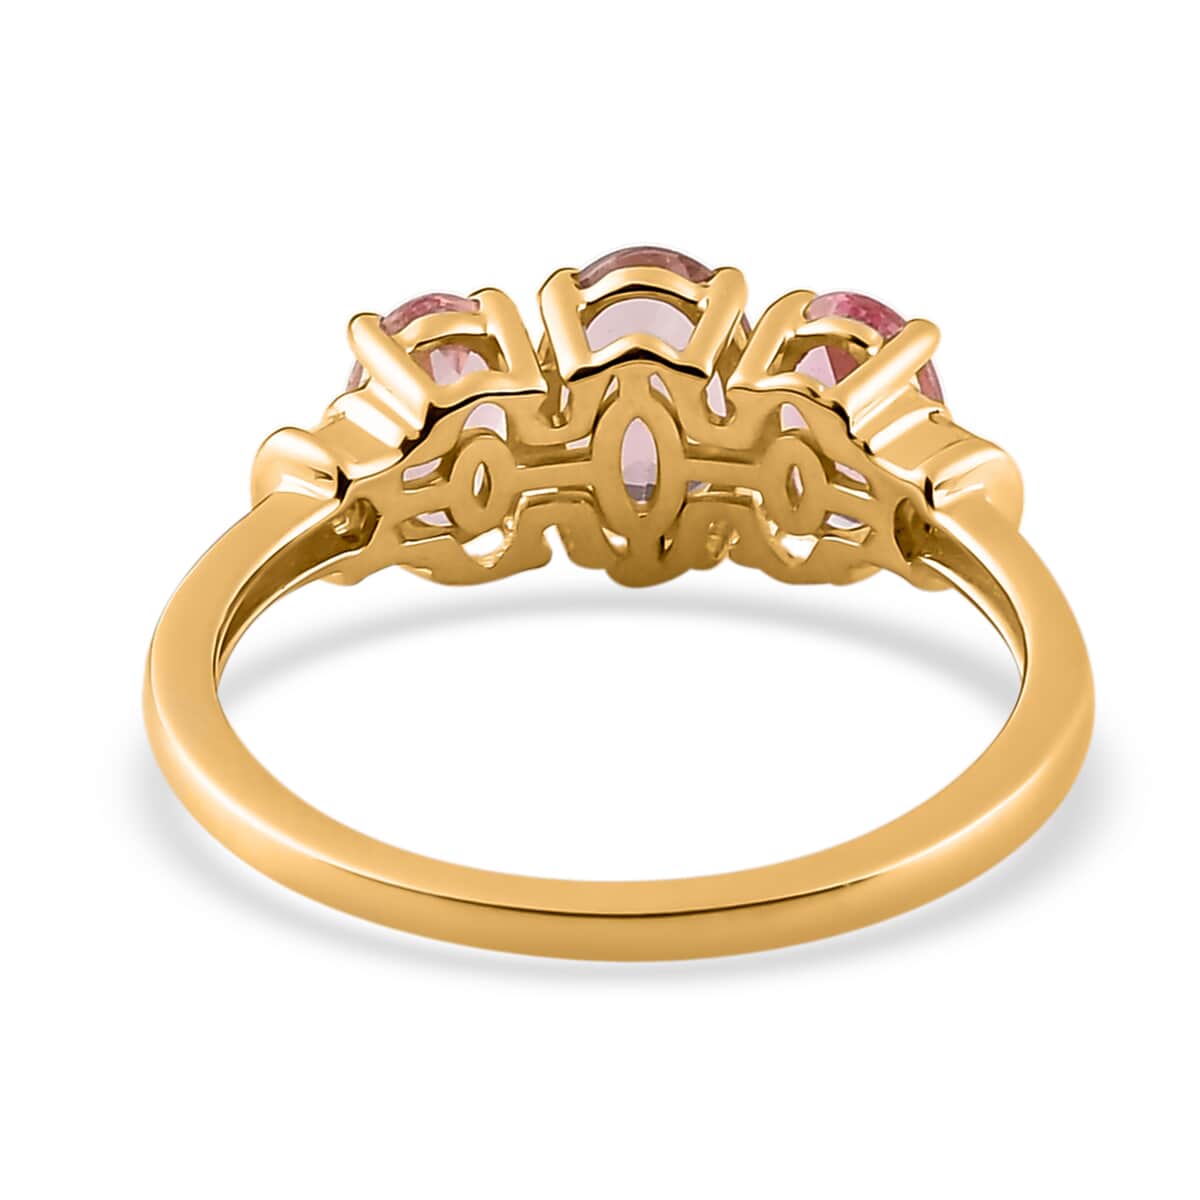 Luxoro AAA Morro Redondo Pink Tourmaline and Diamond Trilogy Ring in 10K Yellow Gold, Pink Tourmaline Jewelry, Birthday Anniversary Wedding Gift For Her 1.70 ctw image number 4